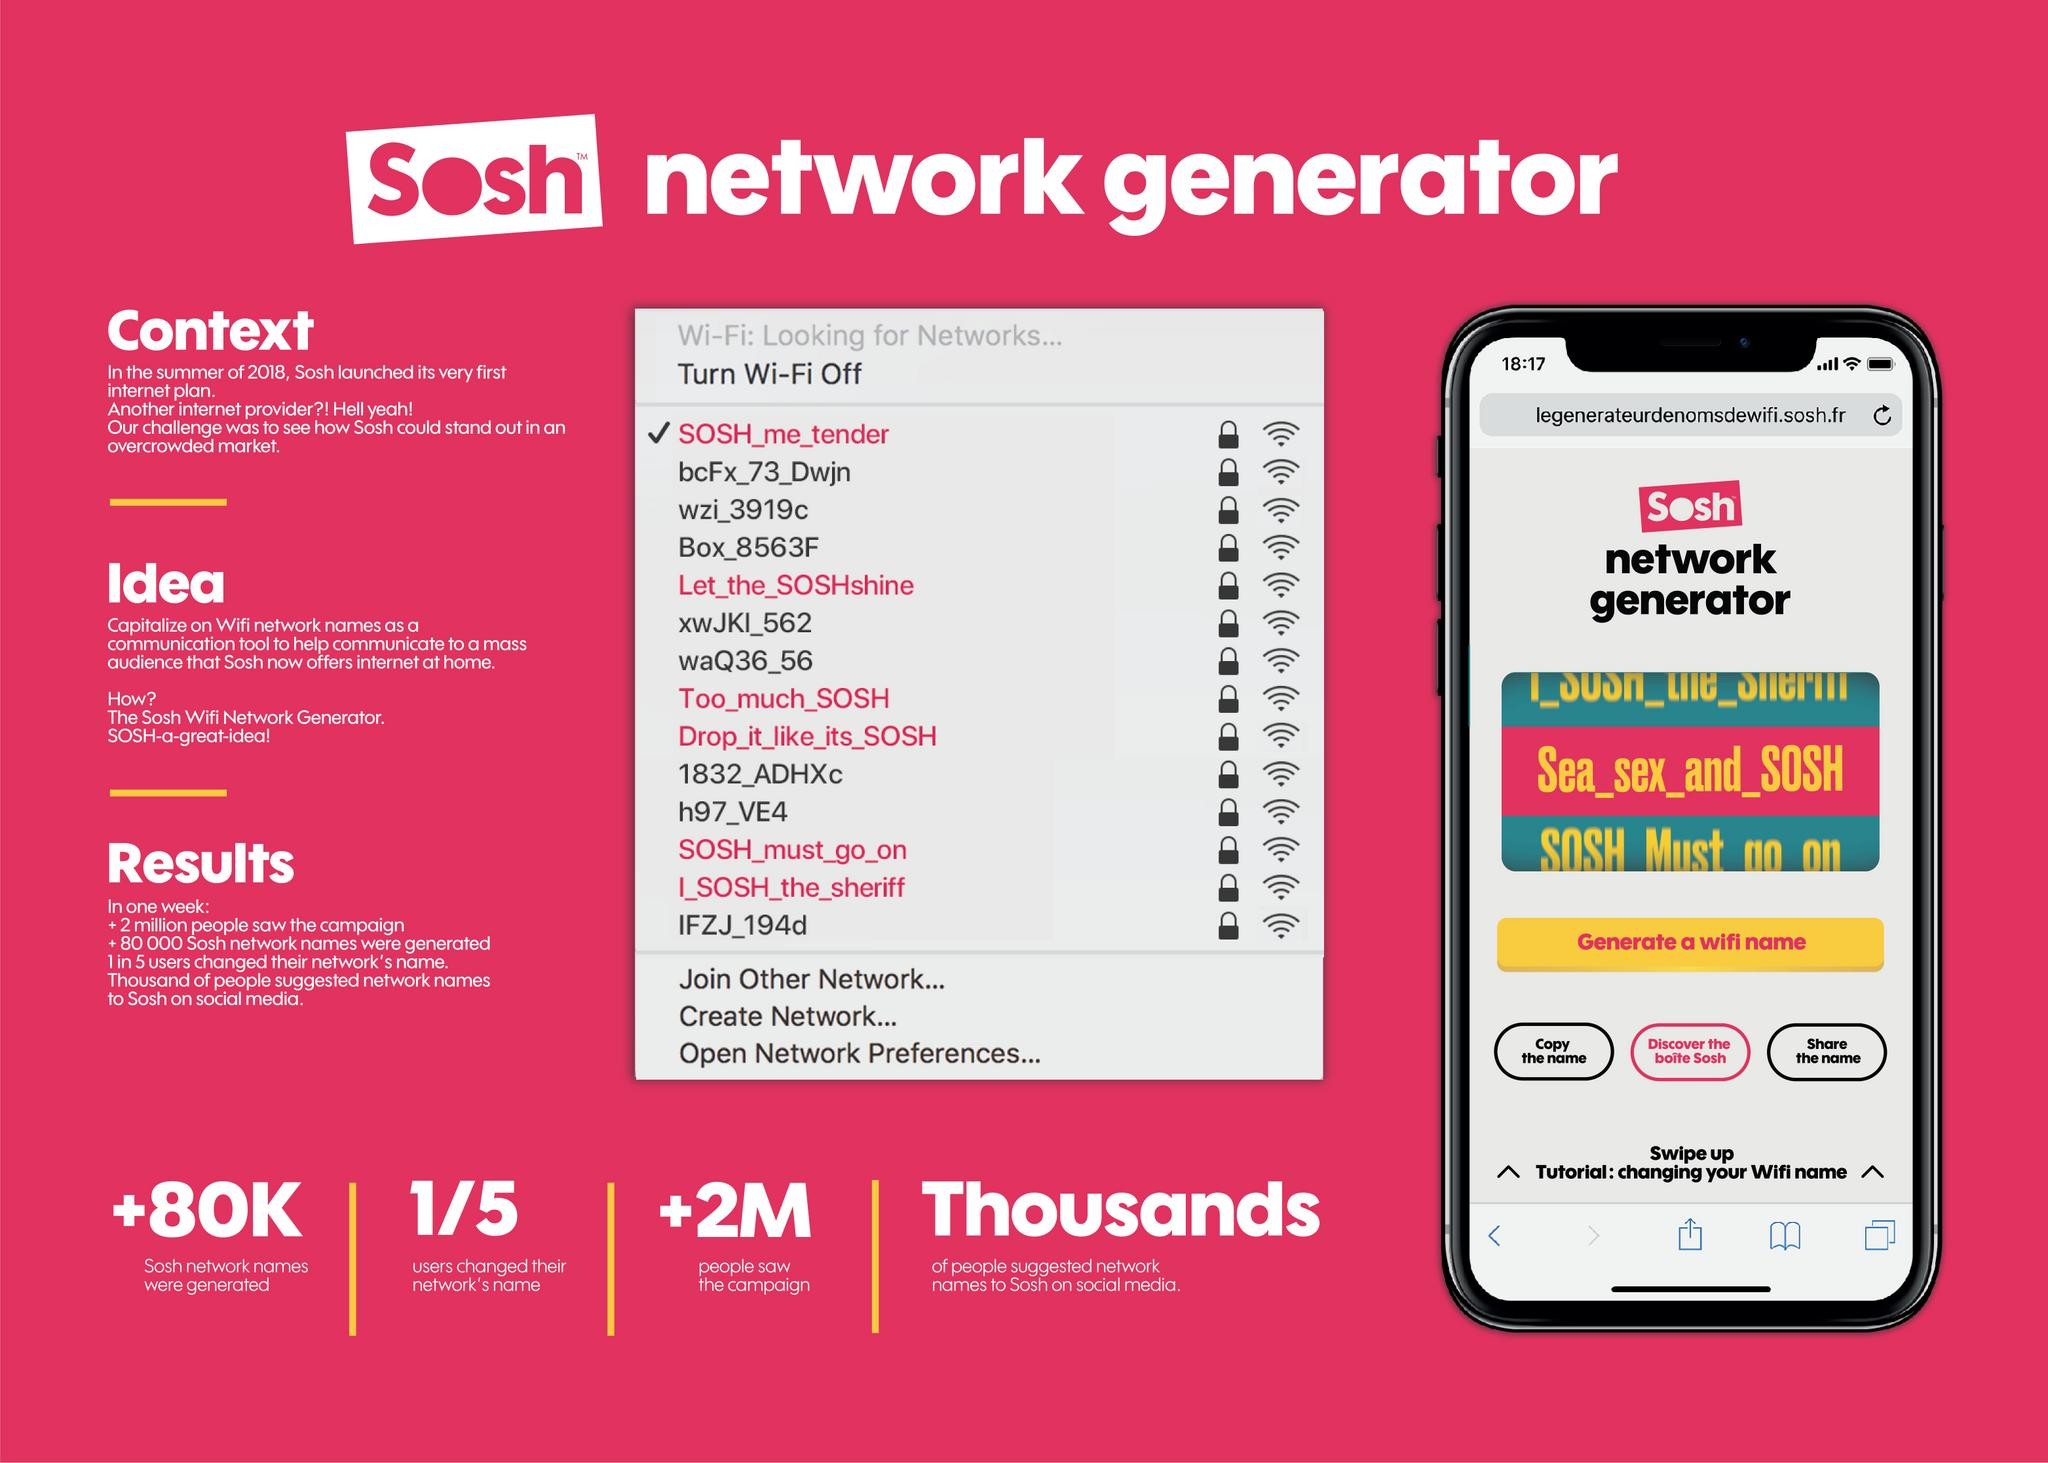 Sosh network generator